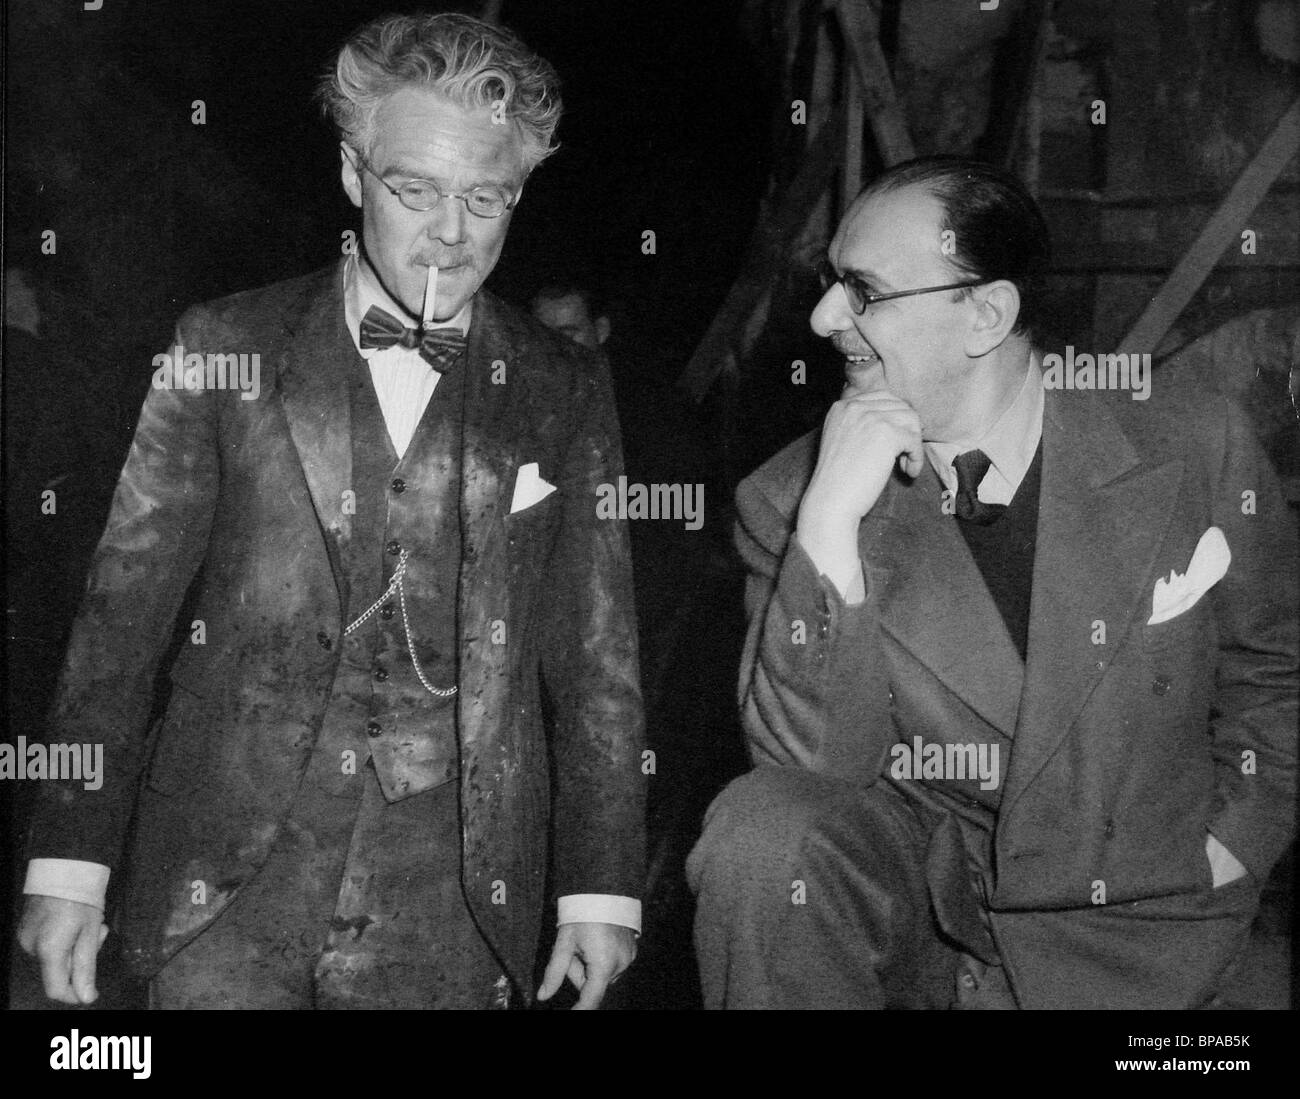 MARIUS GORING, ALEXANDER GALPERSON, MR. PERRIN AND MR. TRAILL, 1948 Stock Photo